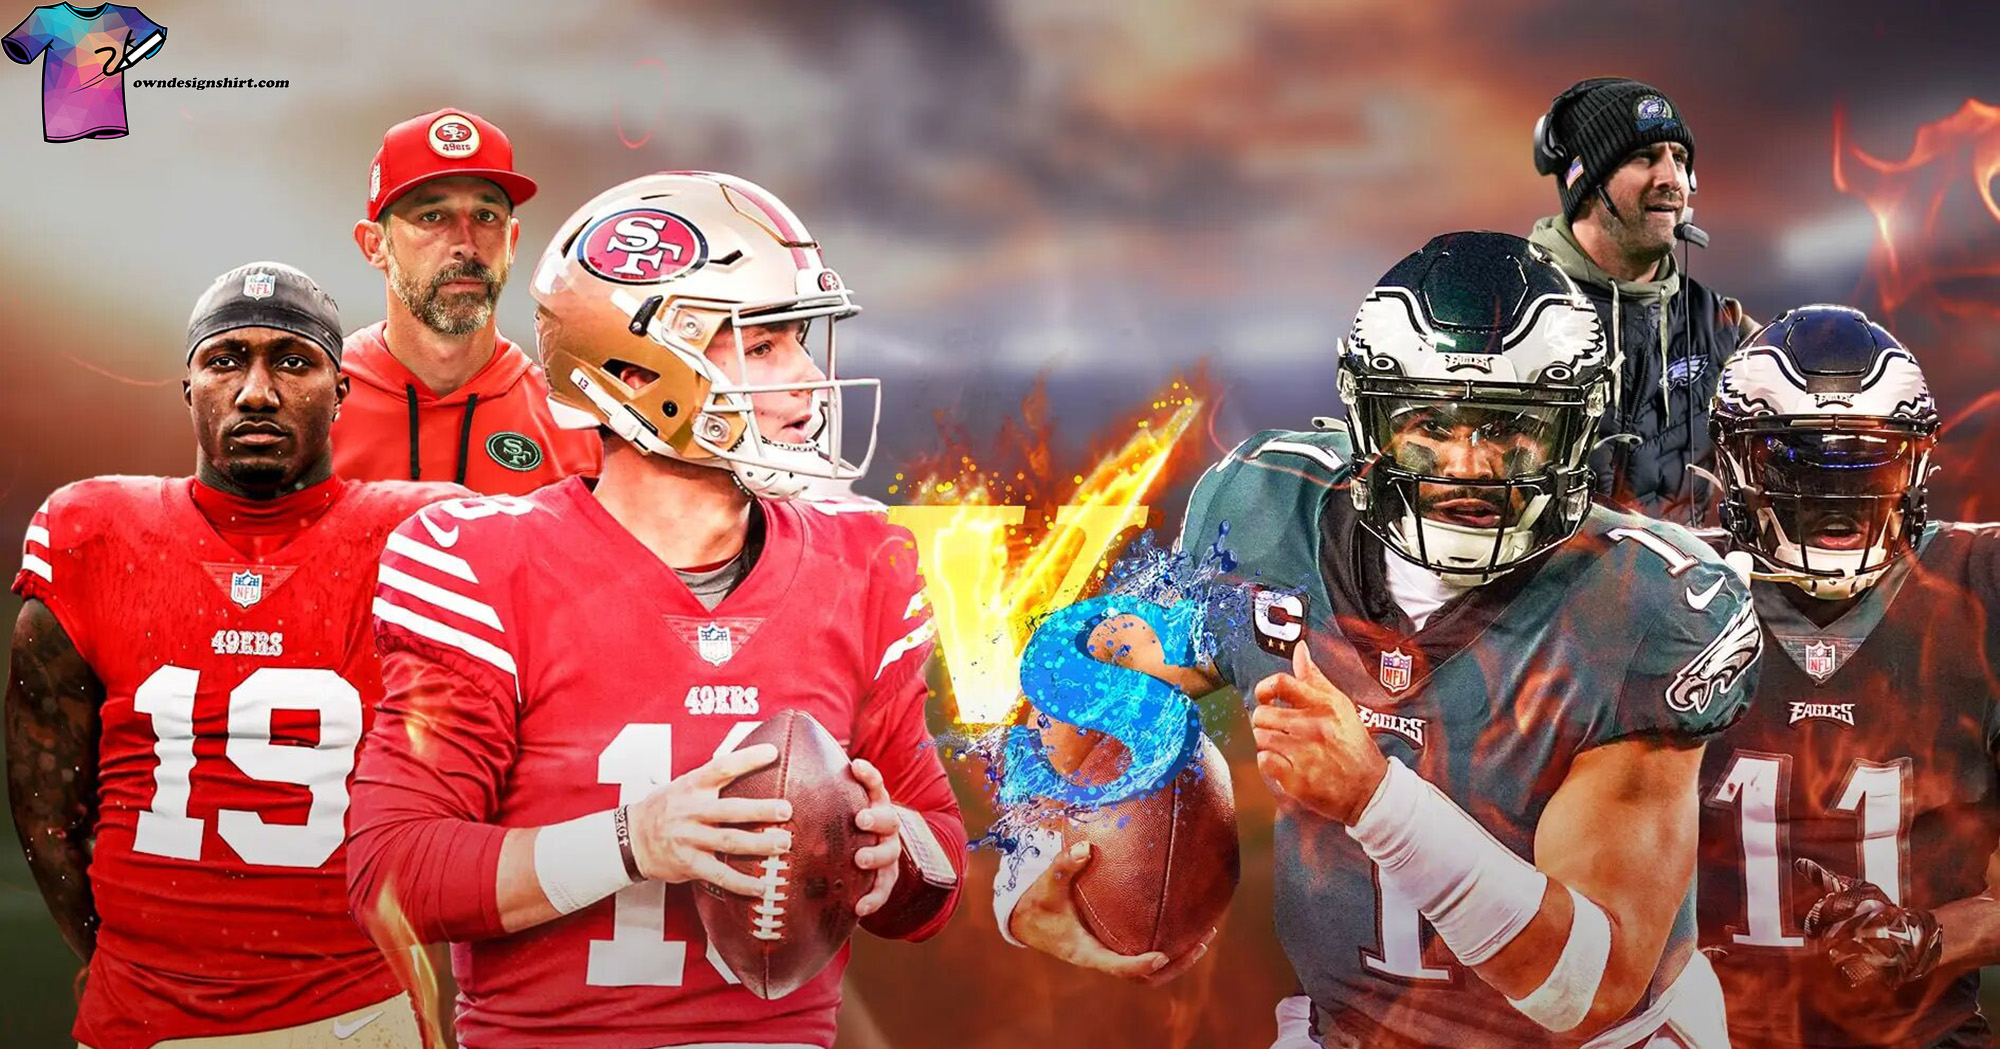 Super Bowl Redux 49ers vs. Eagles - The Epic Rematch of Super Bowl 2018 in Week 13 of Super Bowl 2023